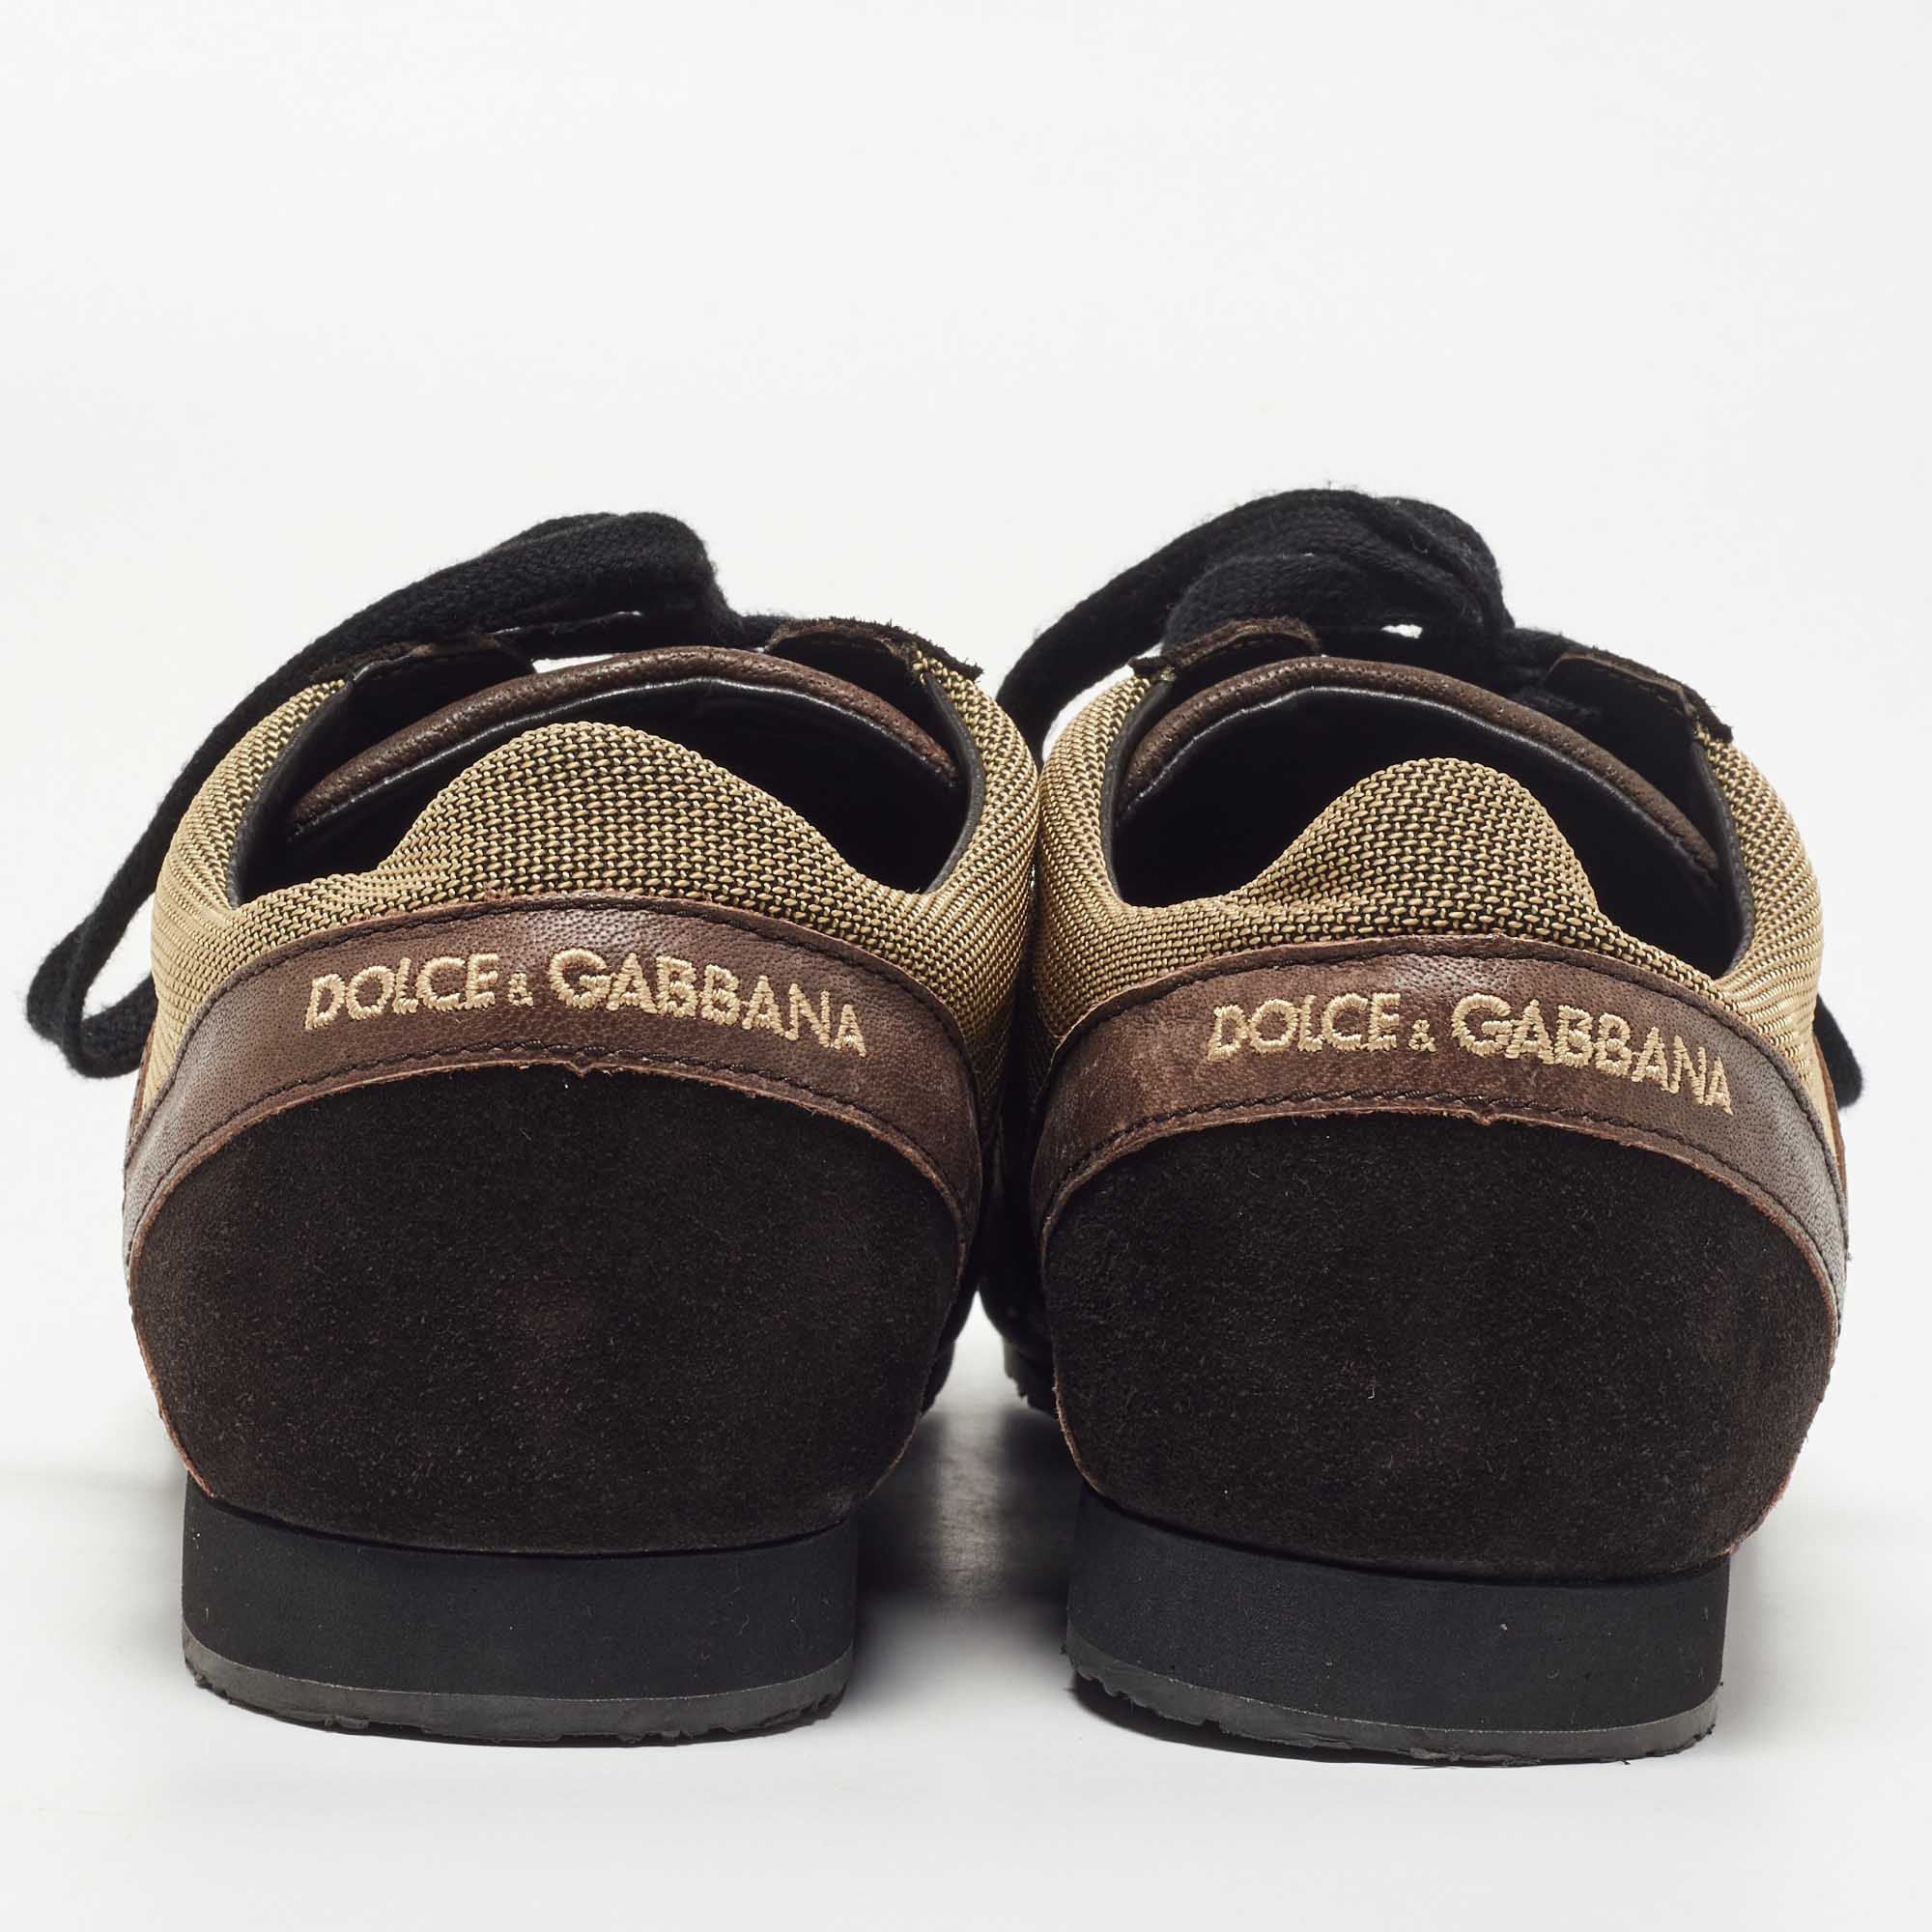 Dolce & Gabbana Brown/Beige Suede Low Top Sneakers Size 44.5